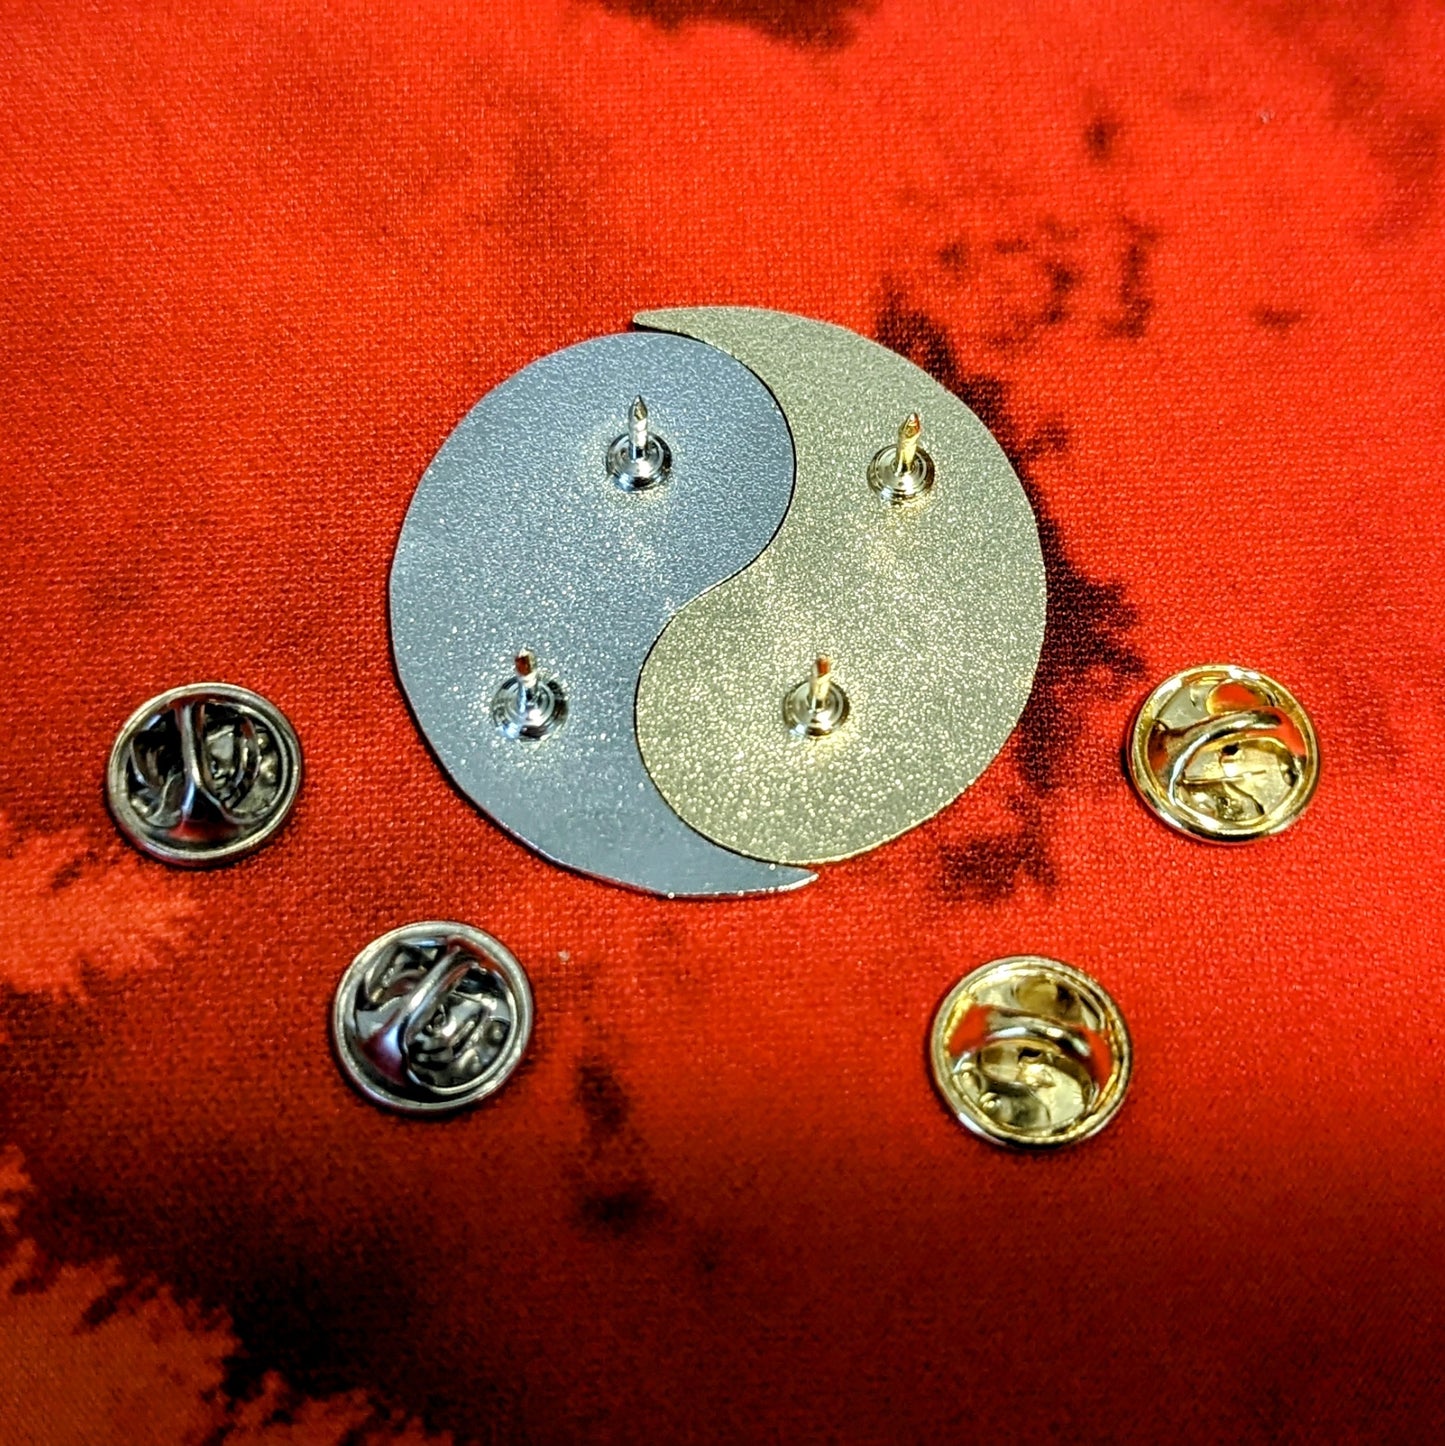 Cosmic Balance sun and moon hard enamel pins from Dragon Woodshop